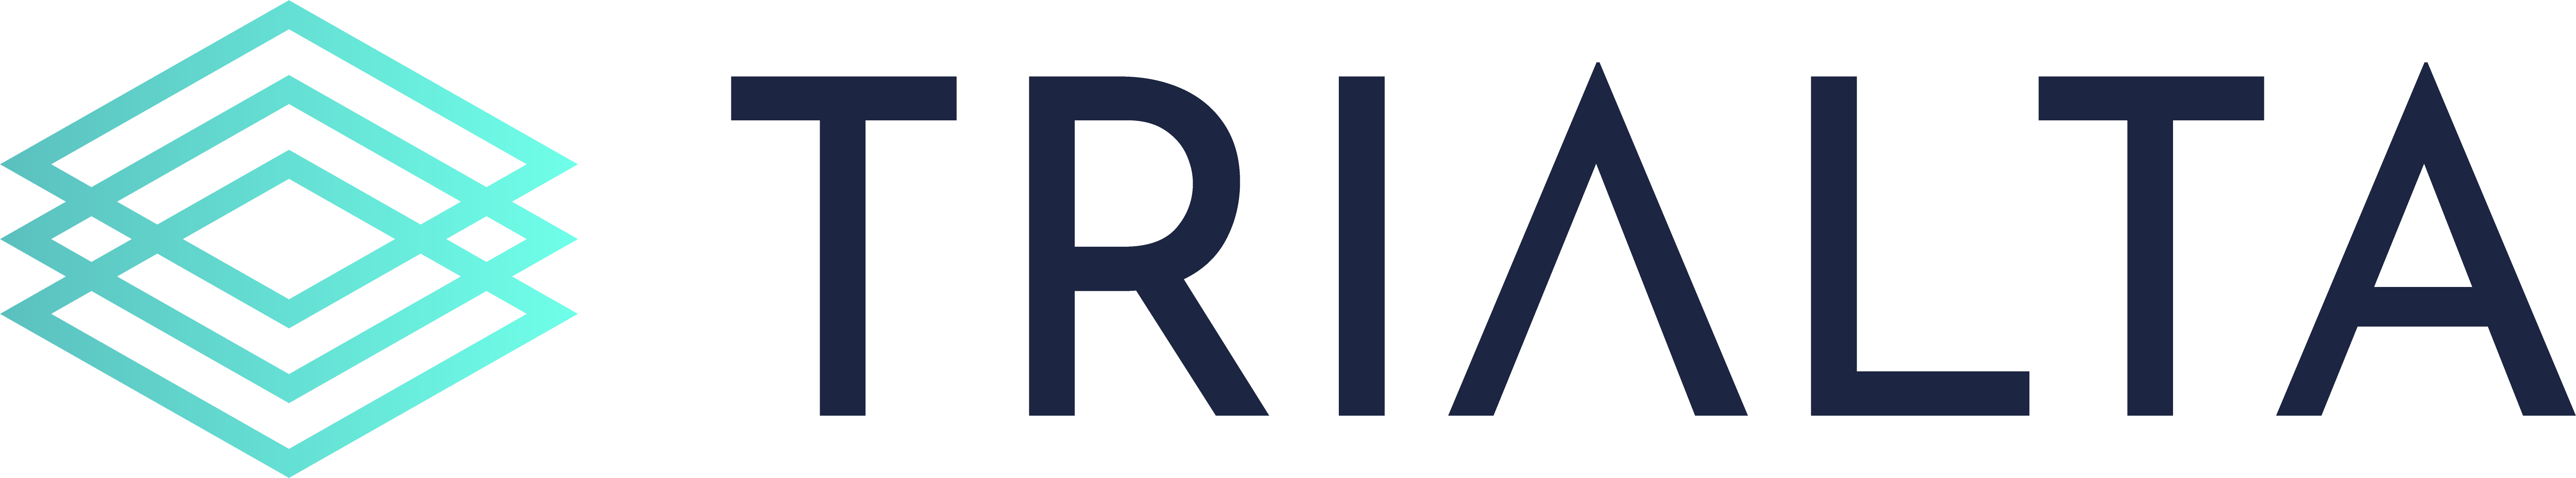 TRIALTA Logo